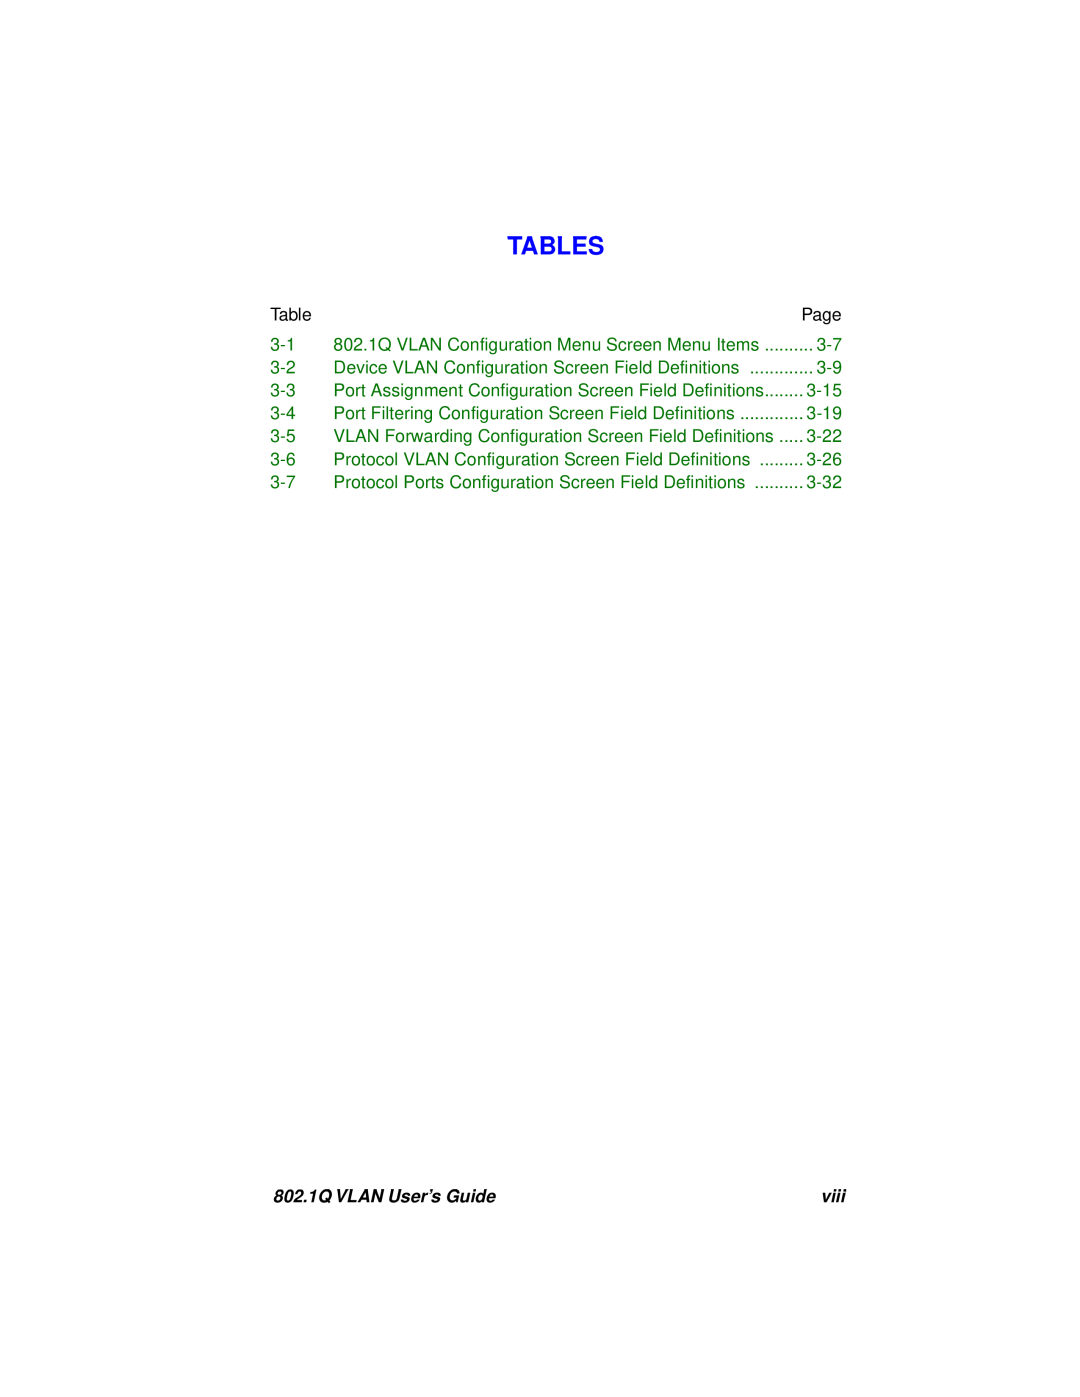 Cabletron Systems manual Tables, 802.1Q VLAN User’s Guide, viii, 802.1Q VLAN Configuration Menu Screen Menu Items 